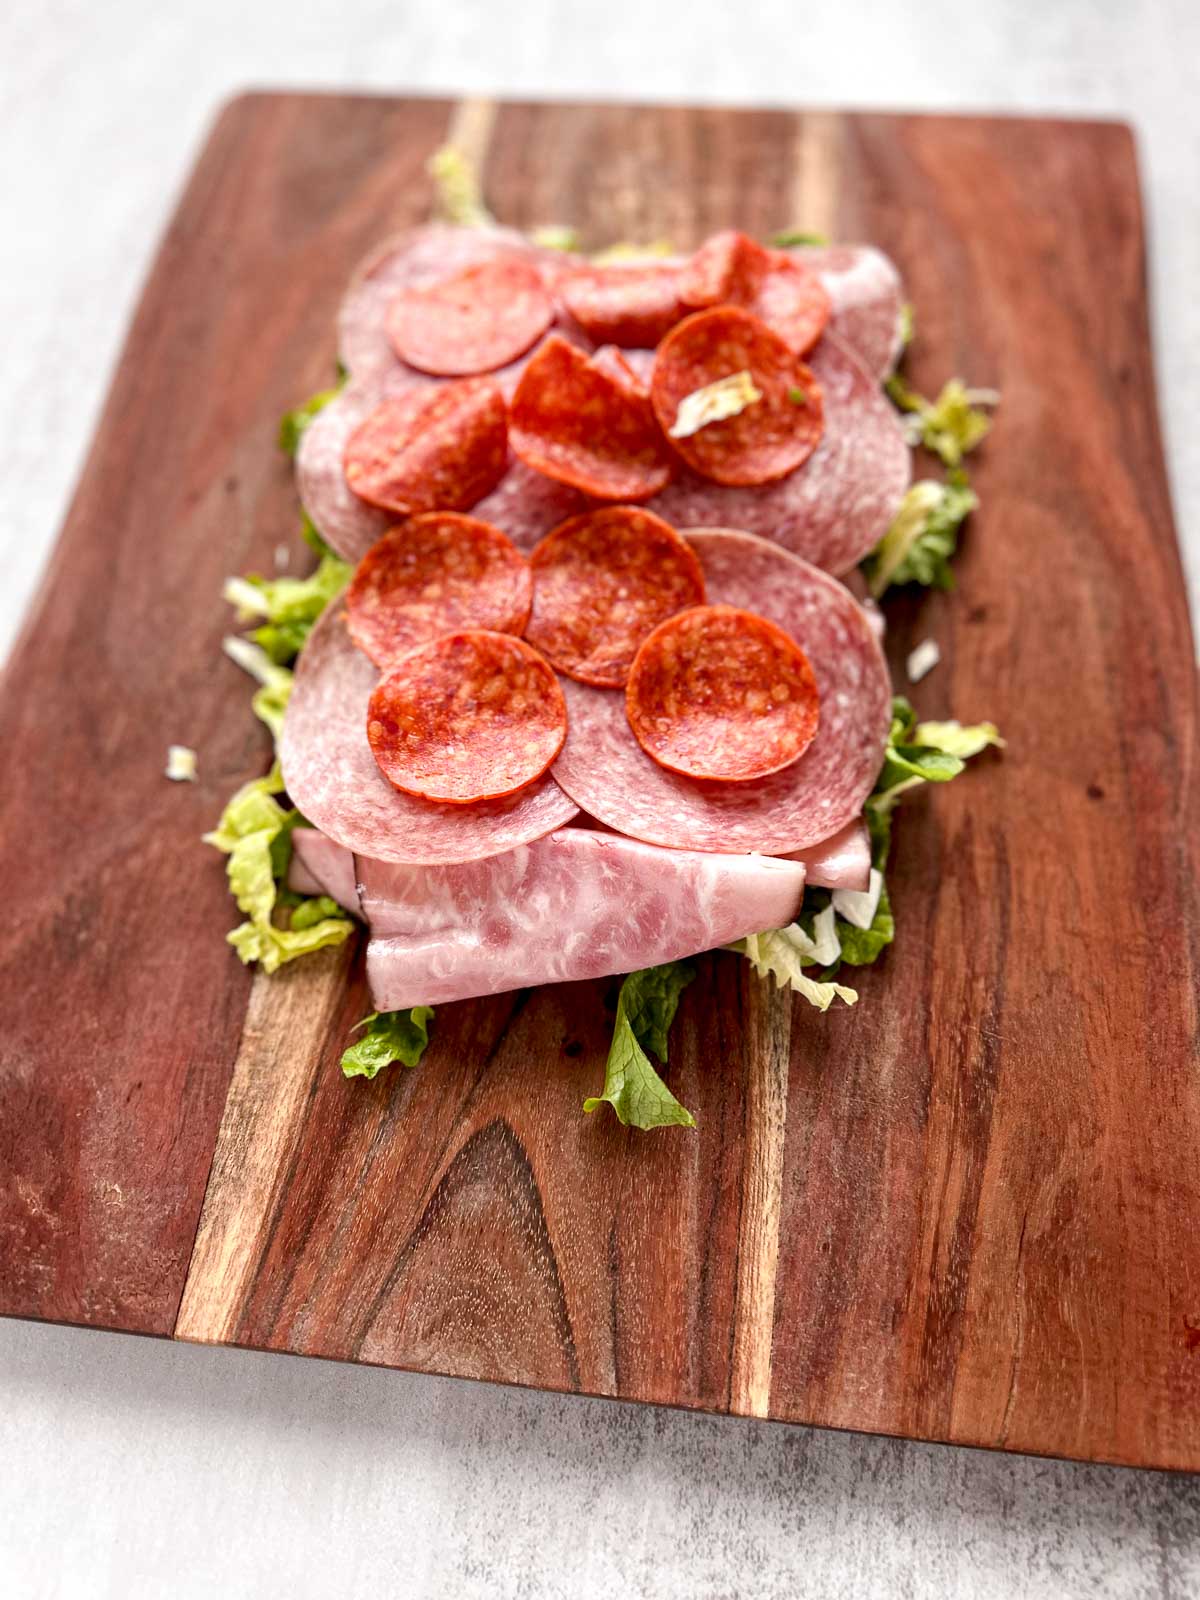 Salami, pepperoni, ham, and lettuce on a wood cutting board.